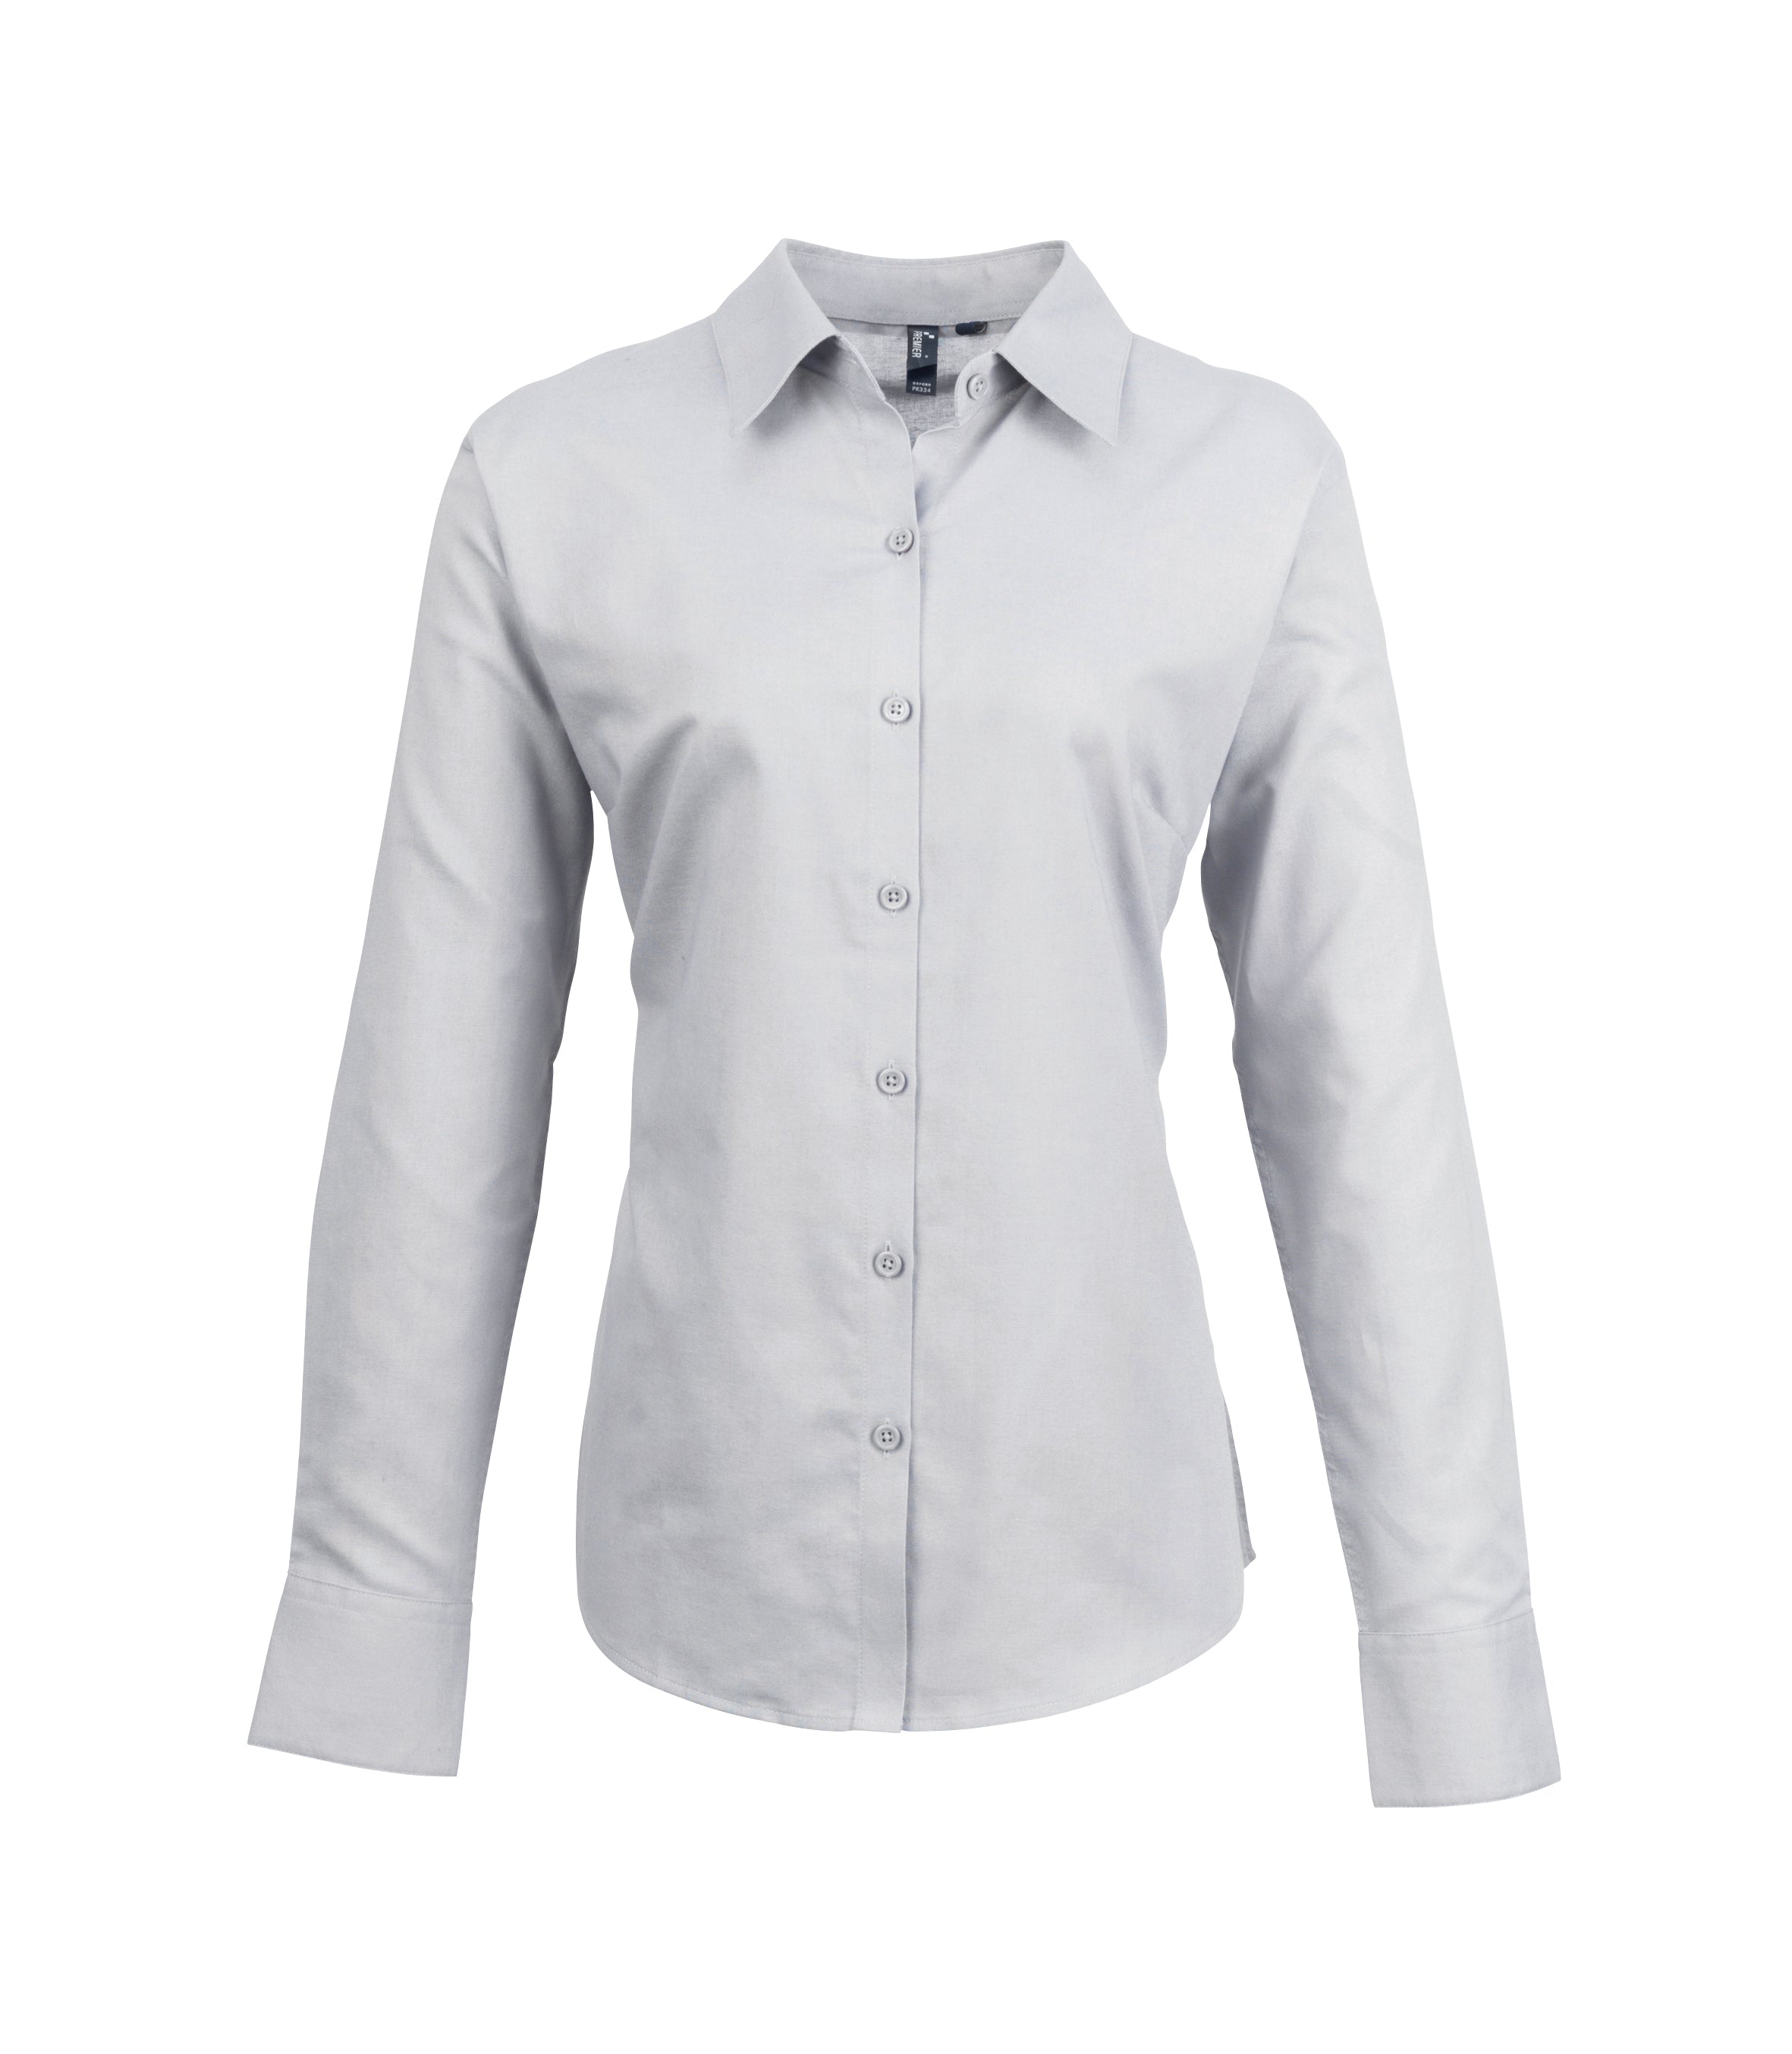 Women's signature Oxford long sleeve shirt- Premier Collection